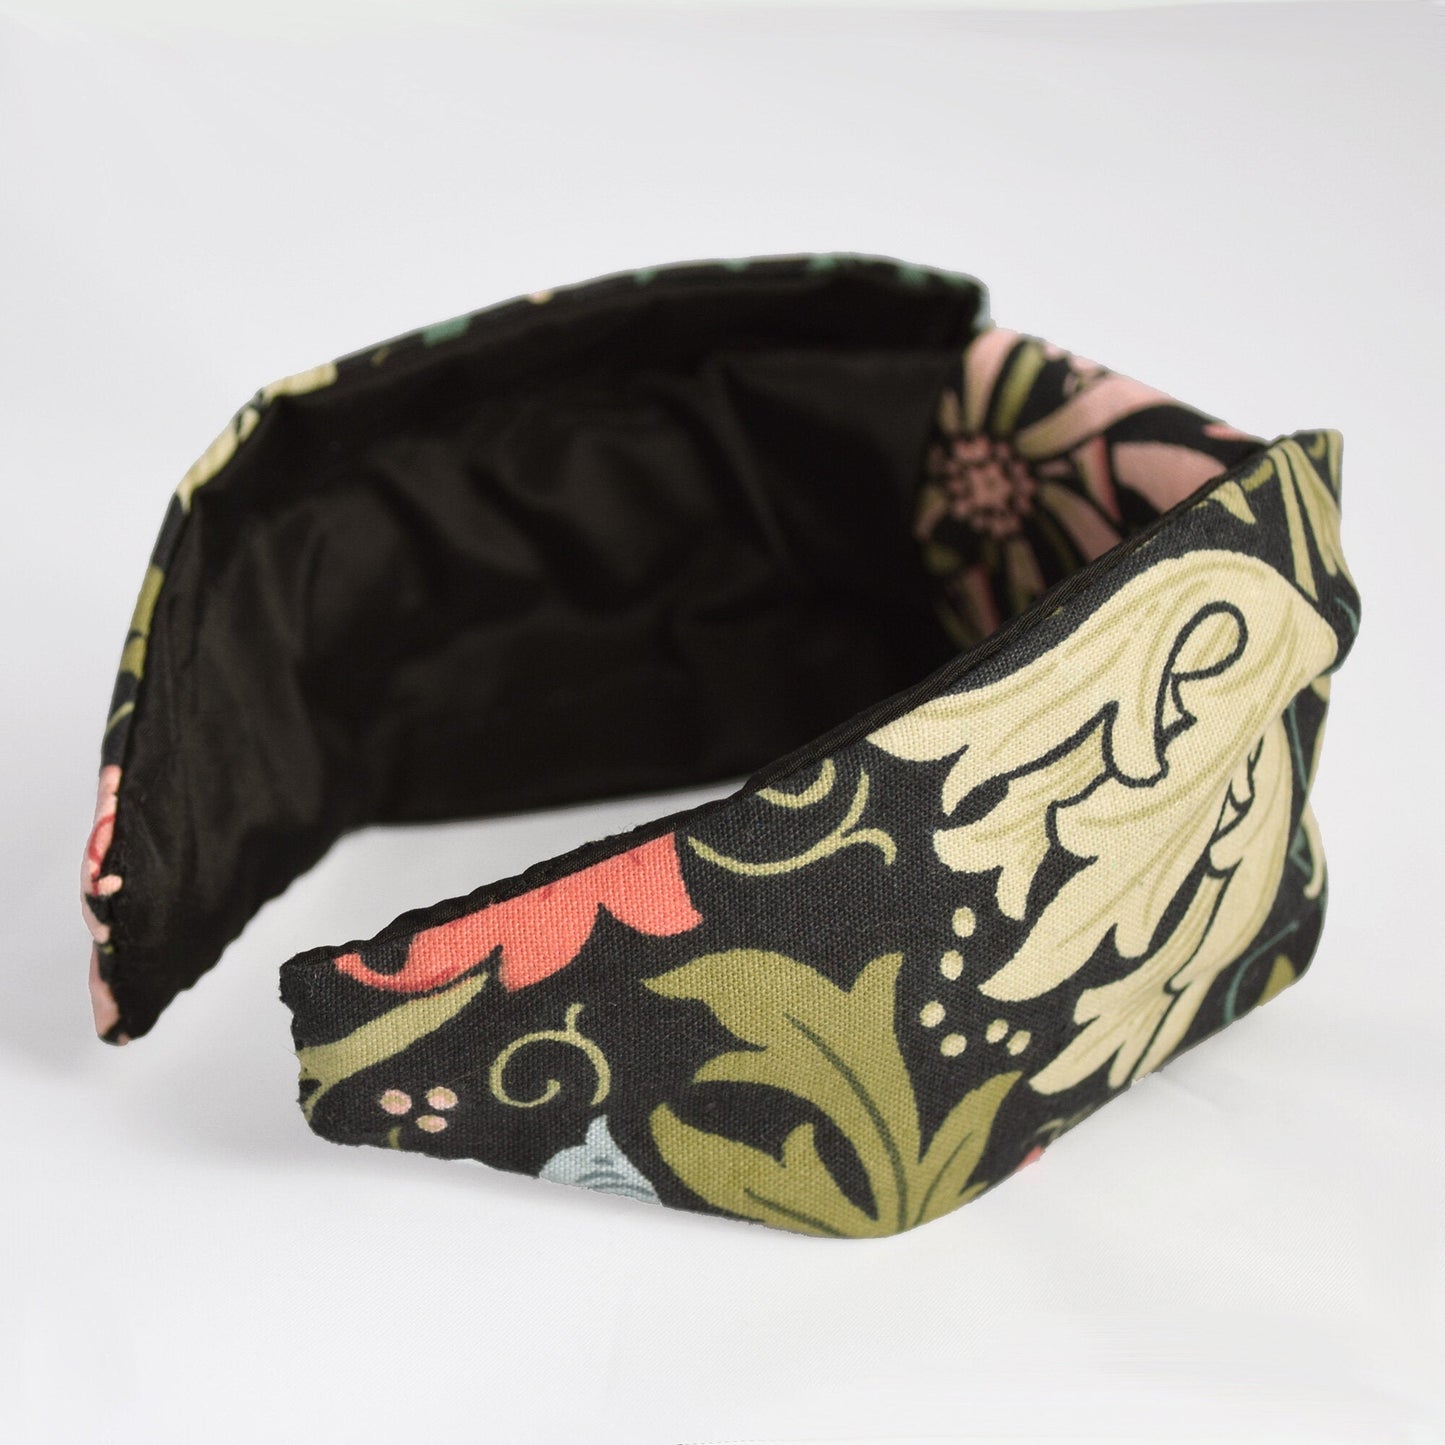 William Morris Compton Cotton Floral Print Headband